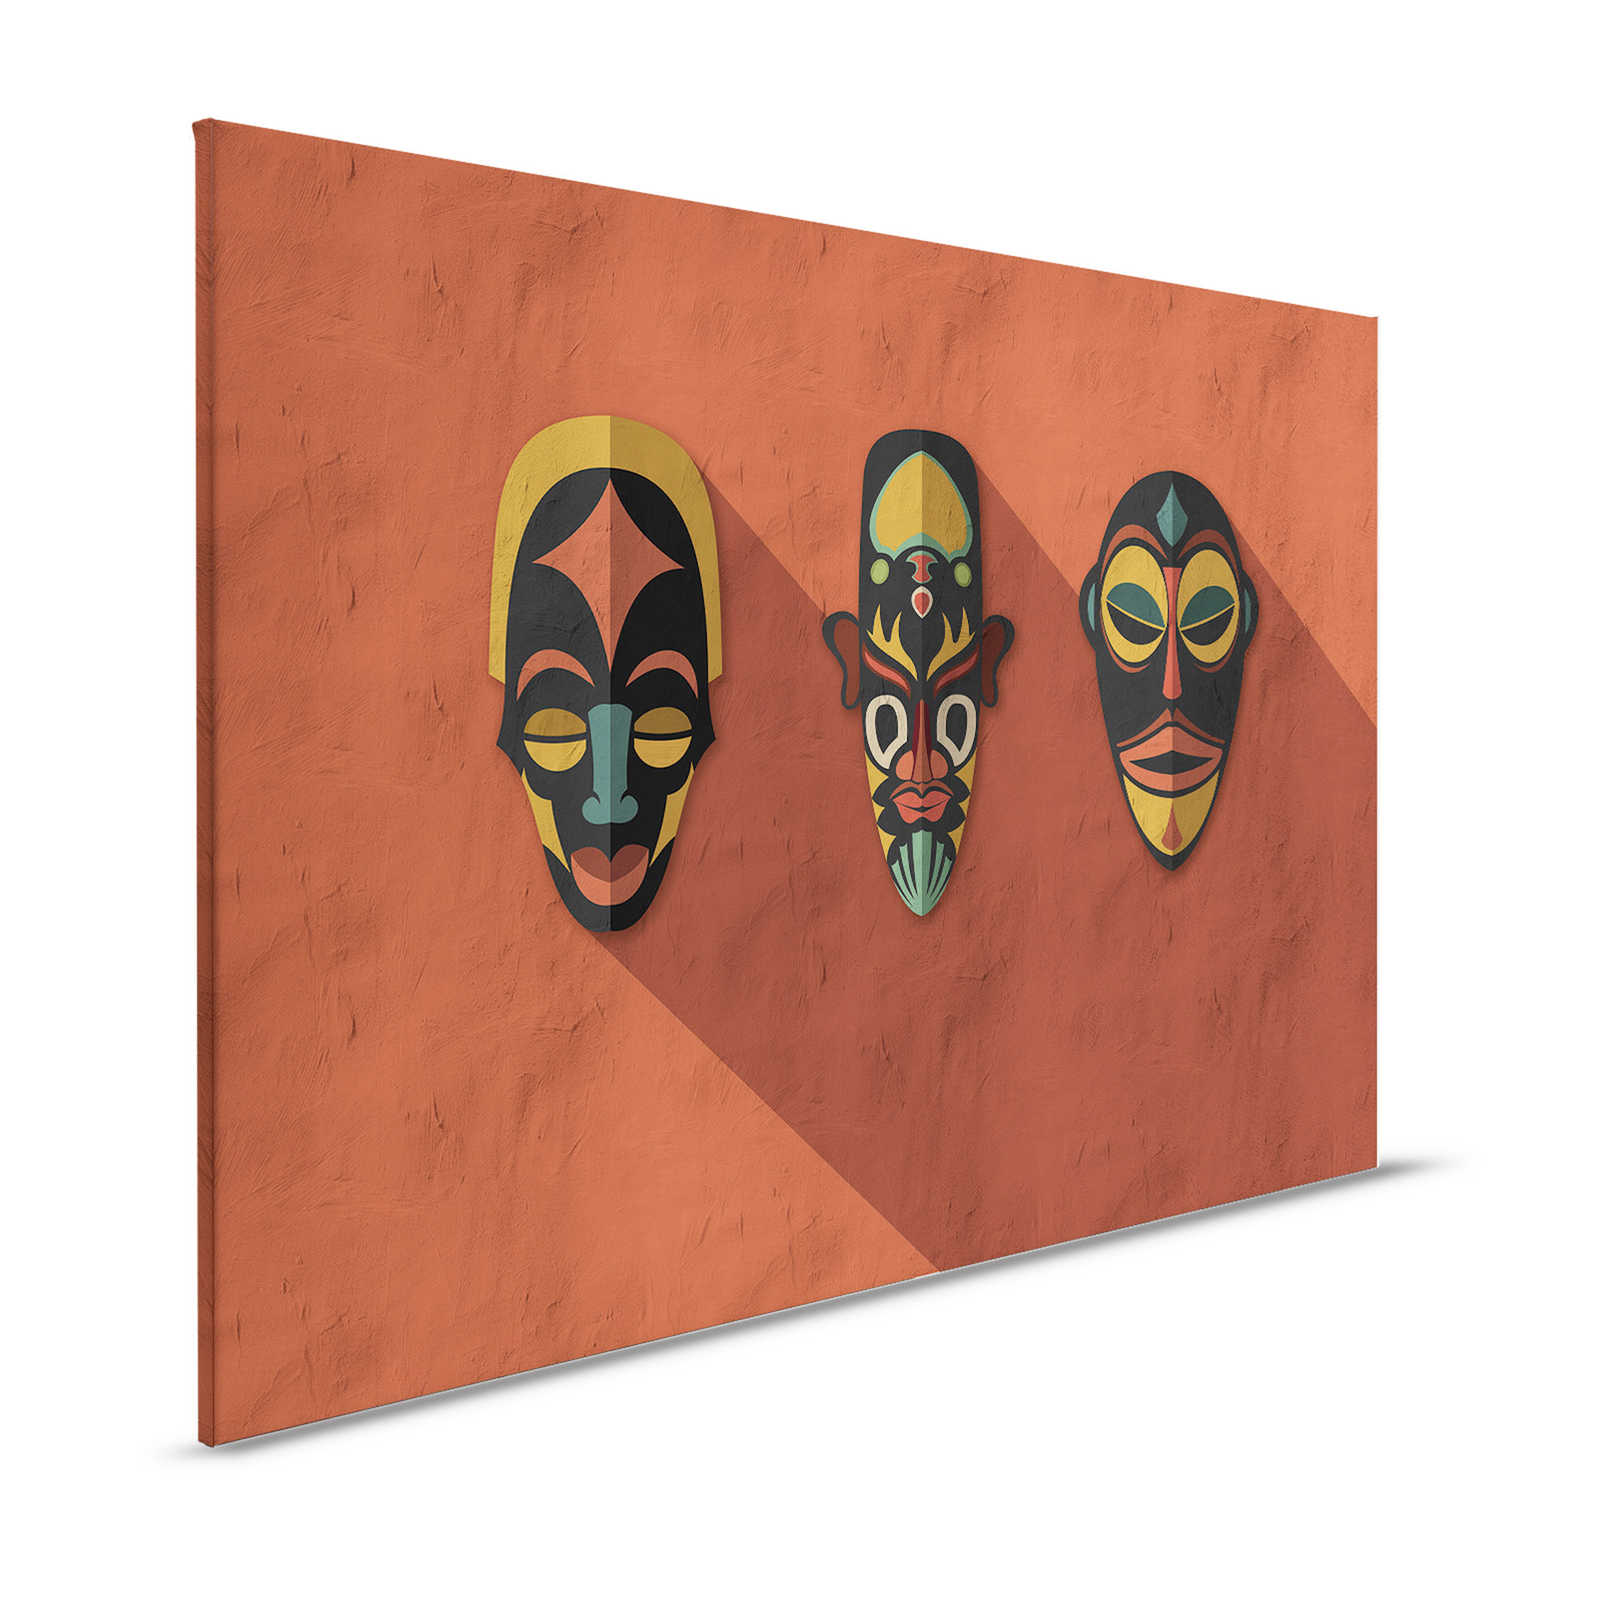             Zulú 2 - Pintura en lienzo Naranja Terracota, África Máscaras Diseño Zulú - 1,20 m x 0,80 m
        